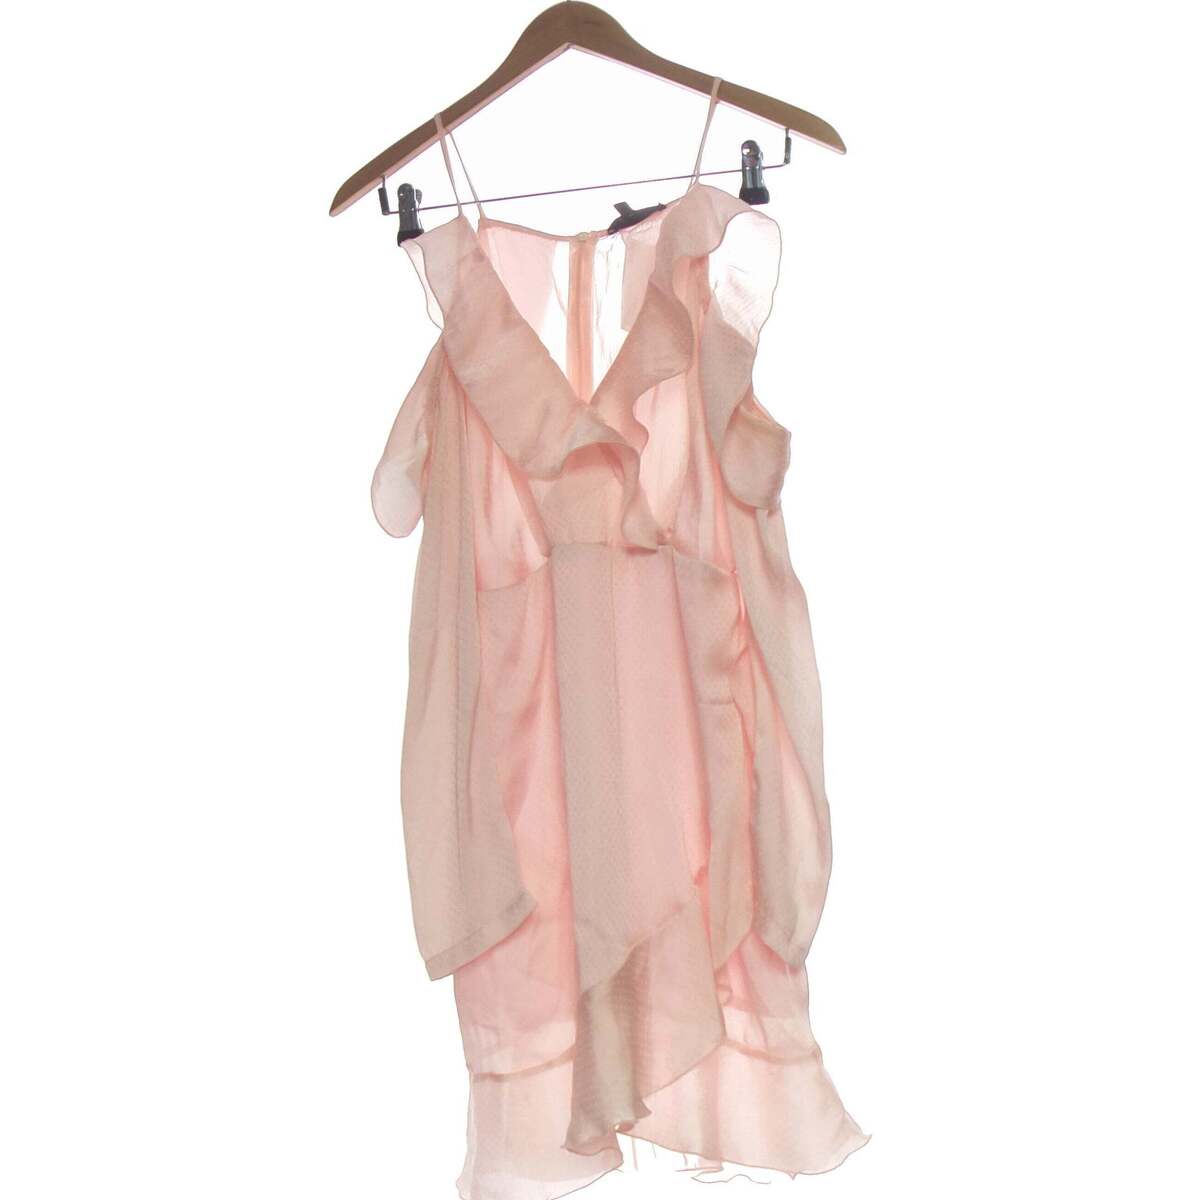 Vêtements Femme Robes courtes Missguided robe courte  36 - T1 - S Rose Rose